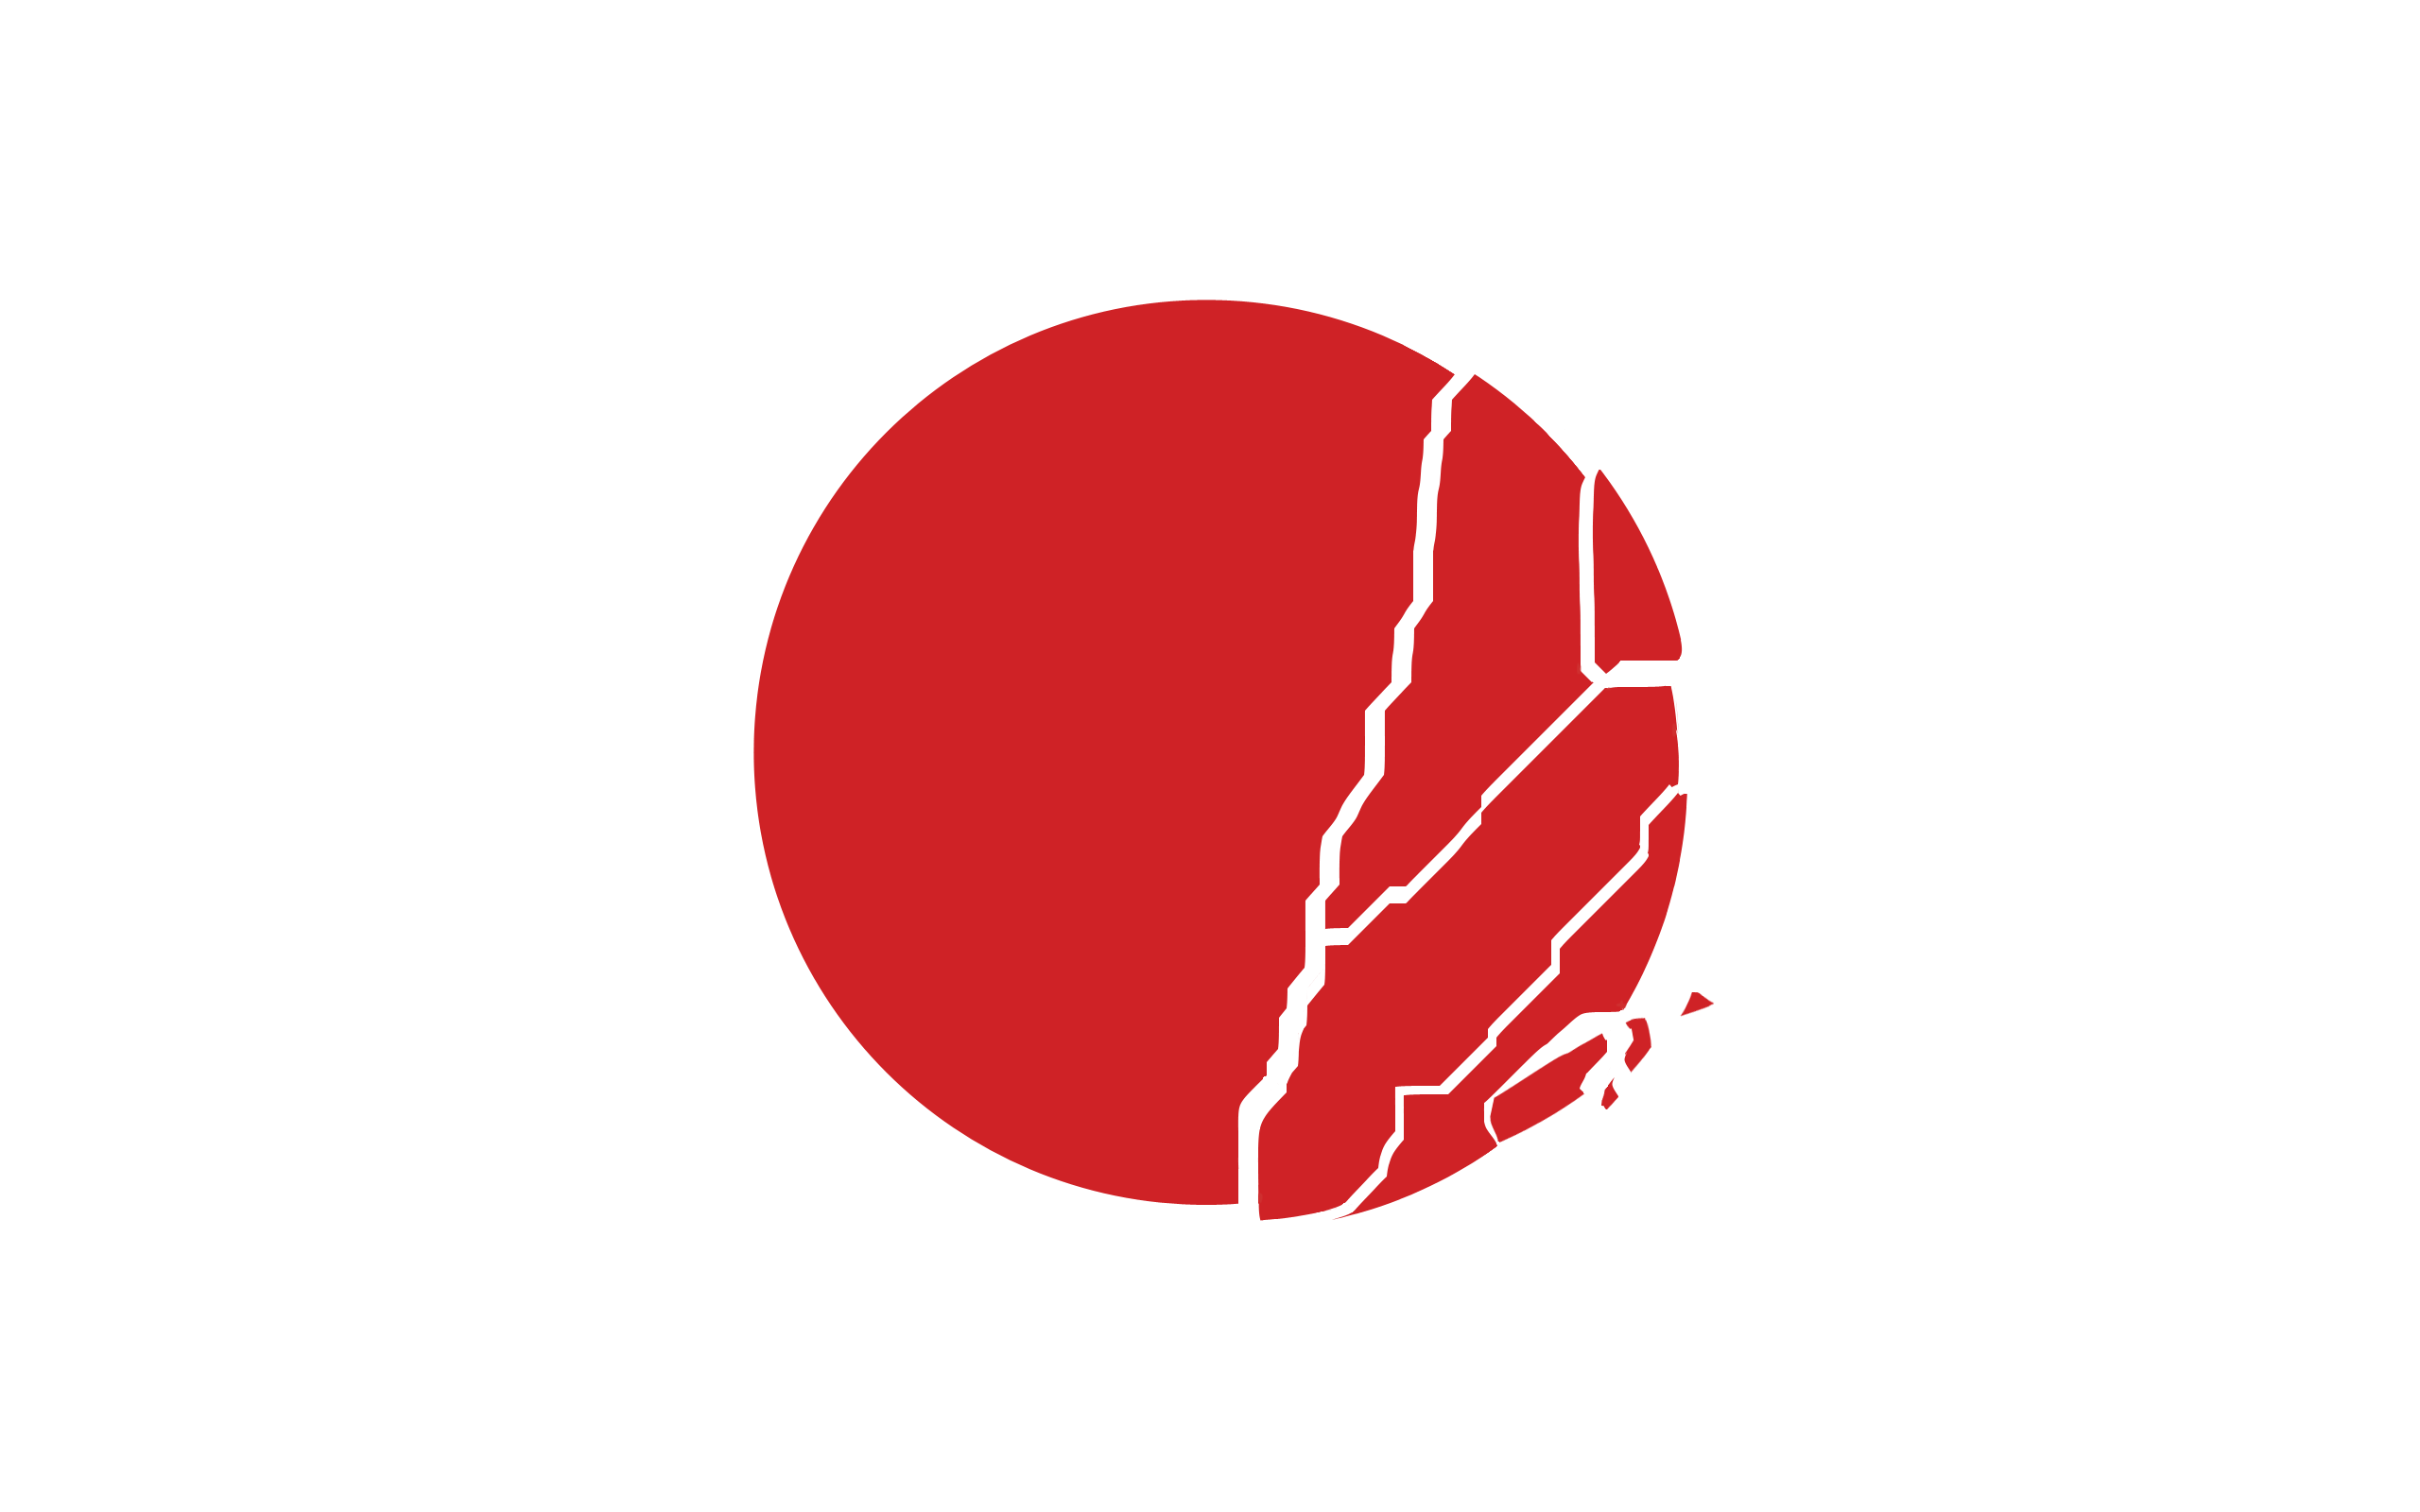 General 2560x1600 Japan flag broken white background simple background minimalism